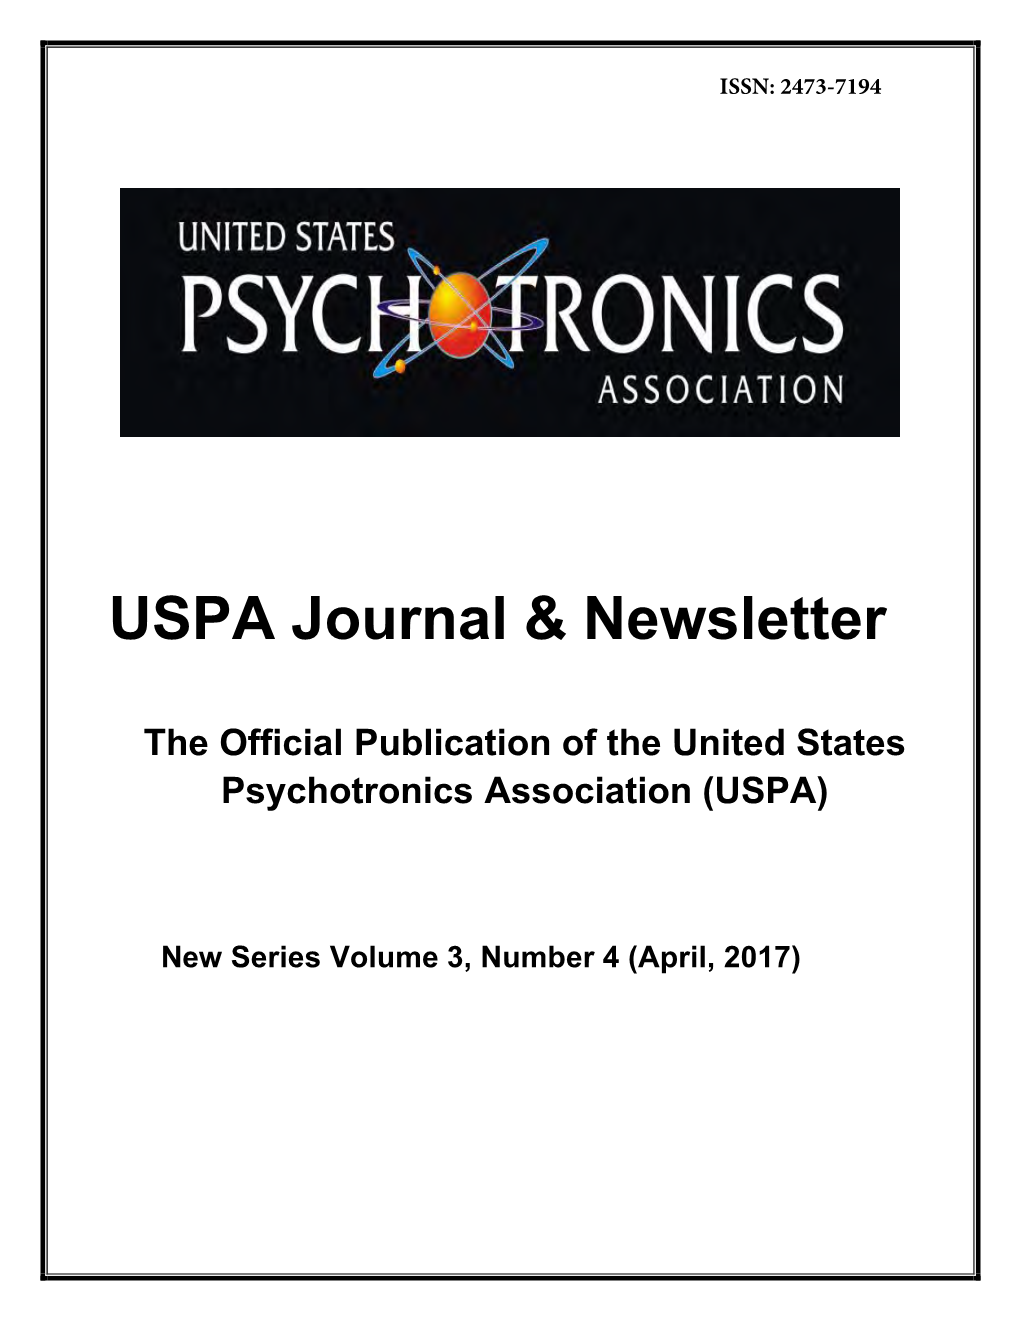 USPA Journal & Newsletter